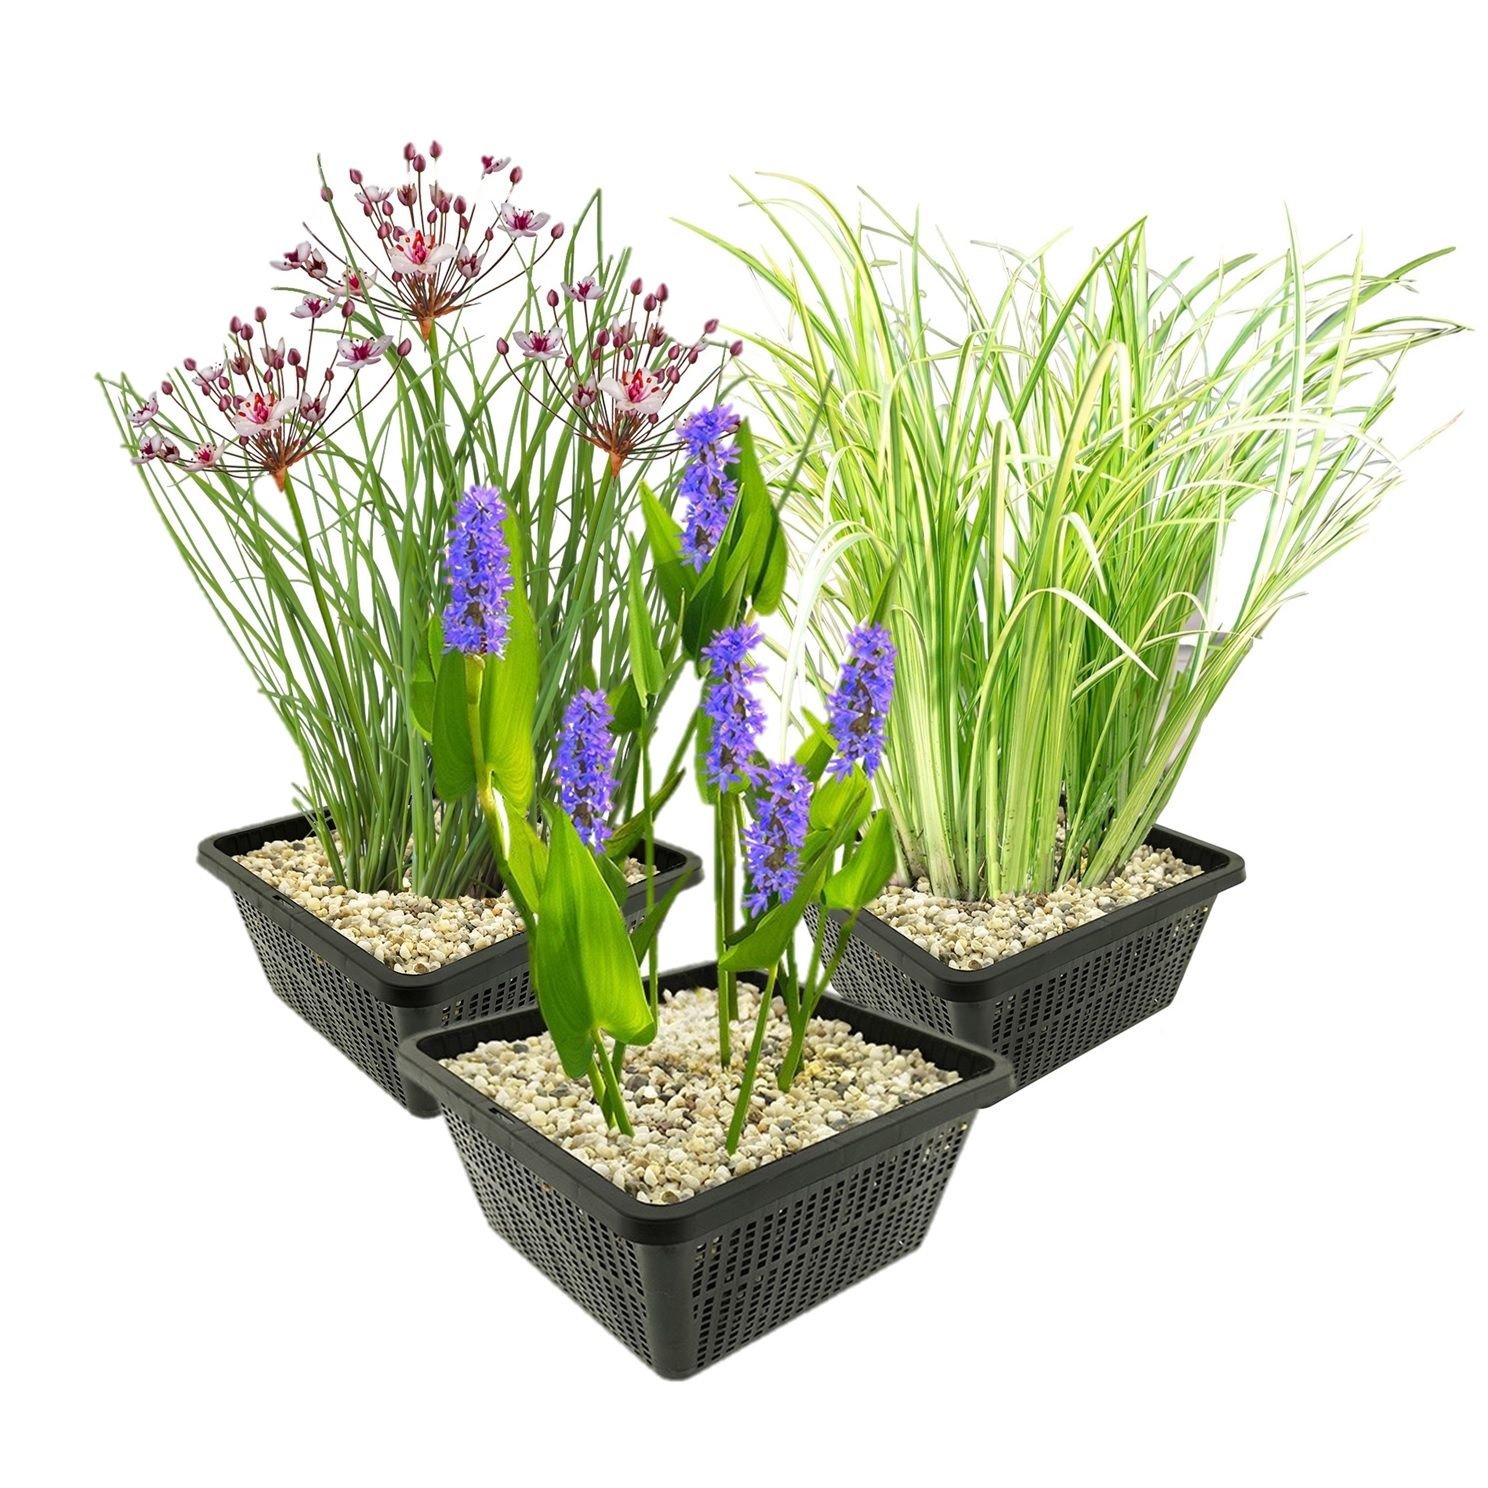 Set de plantes pour étang - Plantes aquatiques